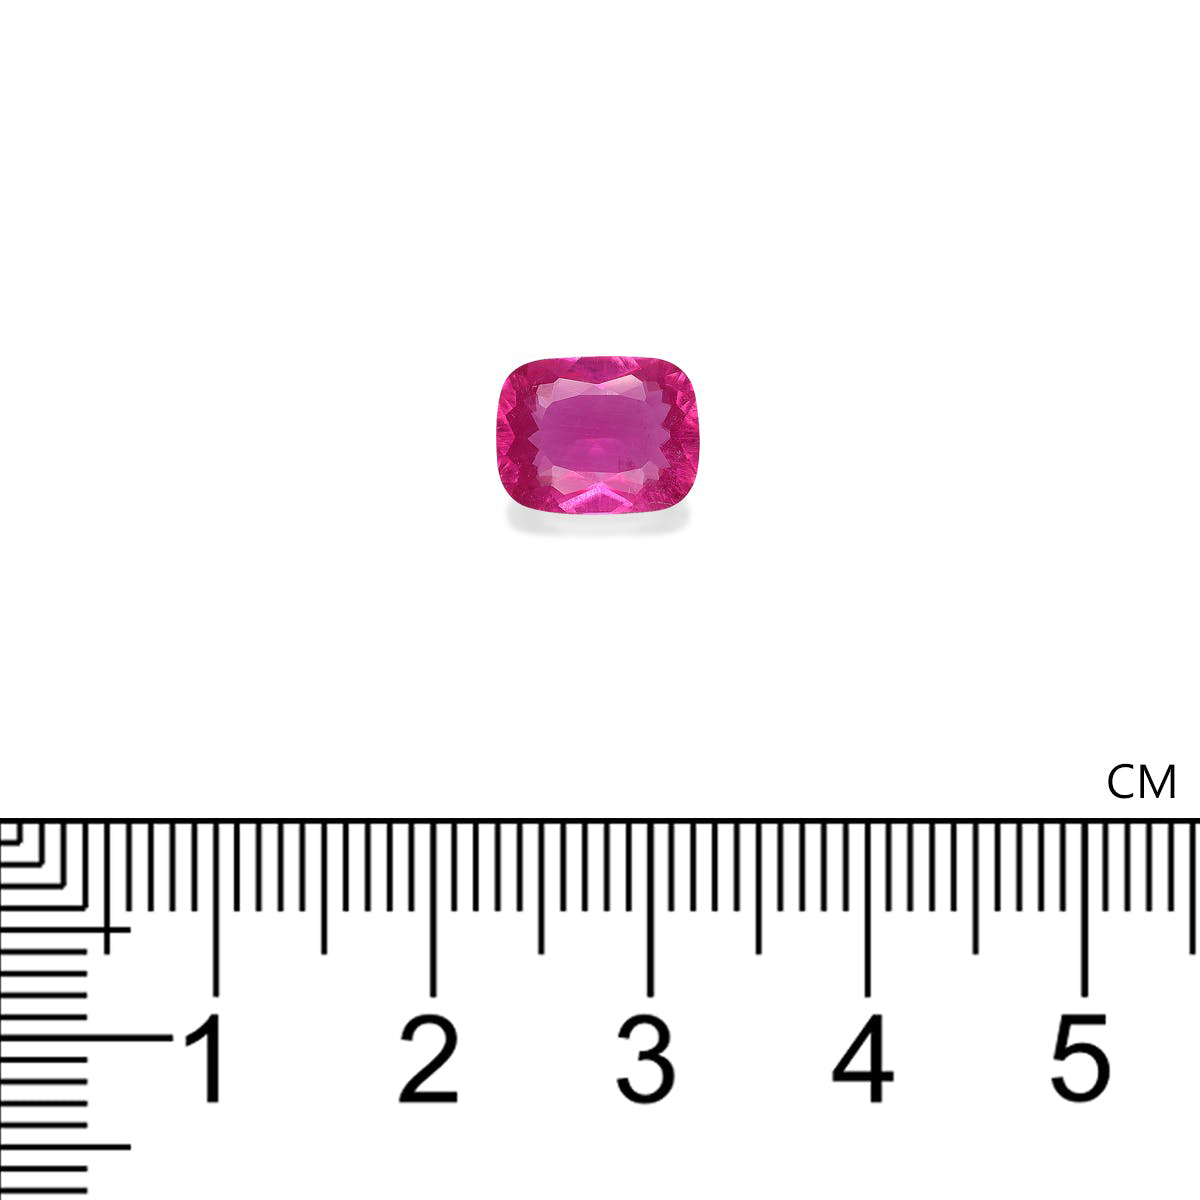 Picture of Vivid Pink Rubellite Tourmaline 1.77ct - 9x7mm (RL1240)